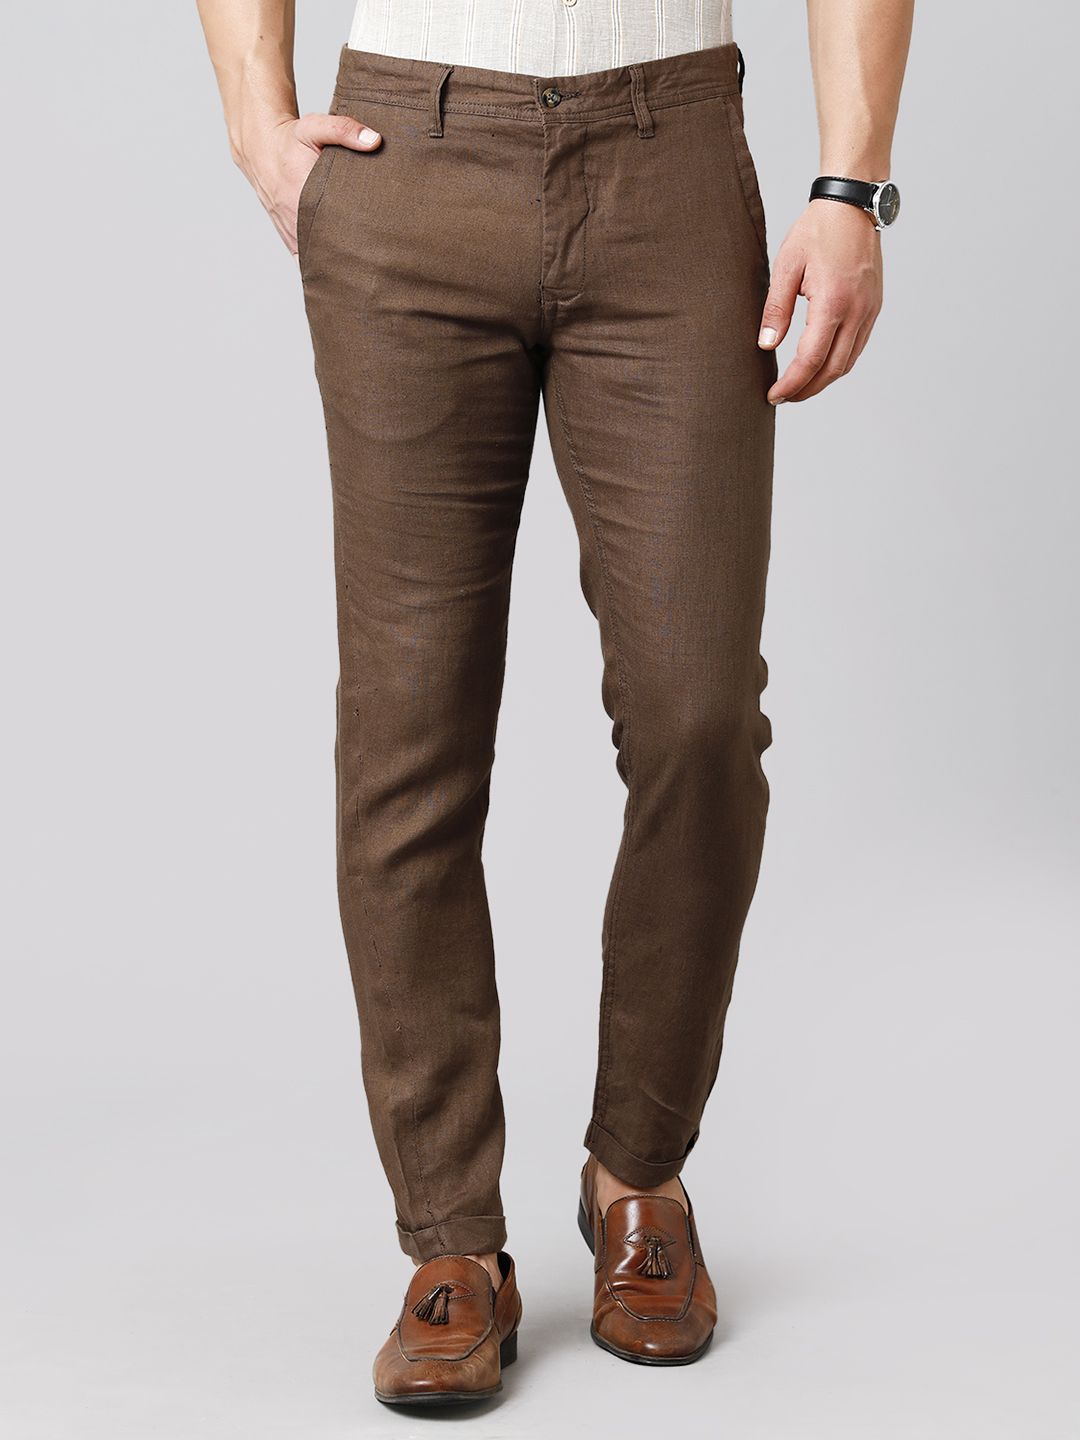 Buy Urbano Fashion Mens Slim Pants chinobrown2801Brown at Amazonin